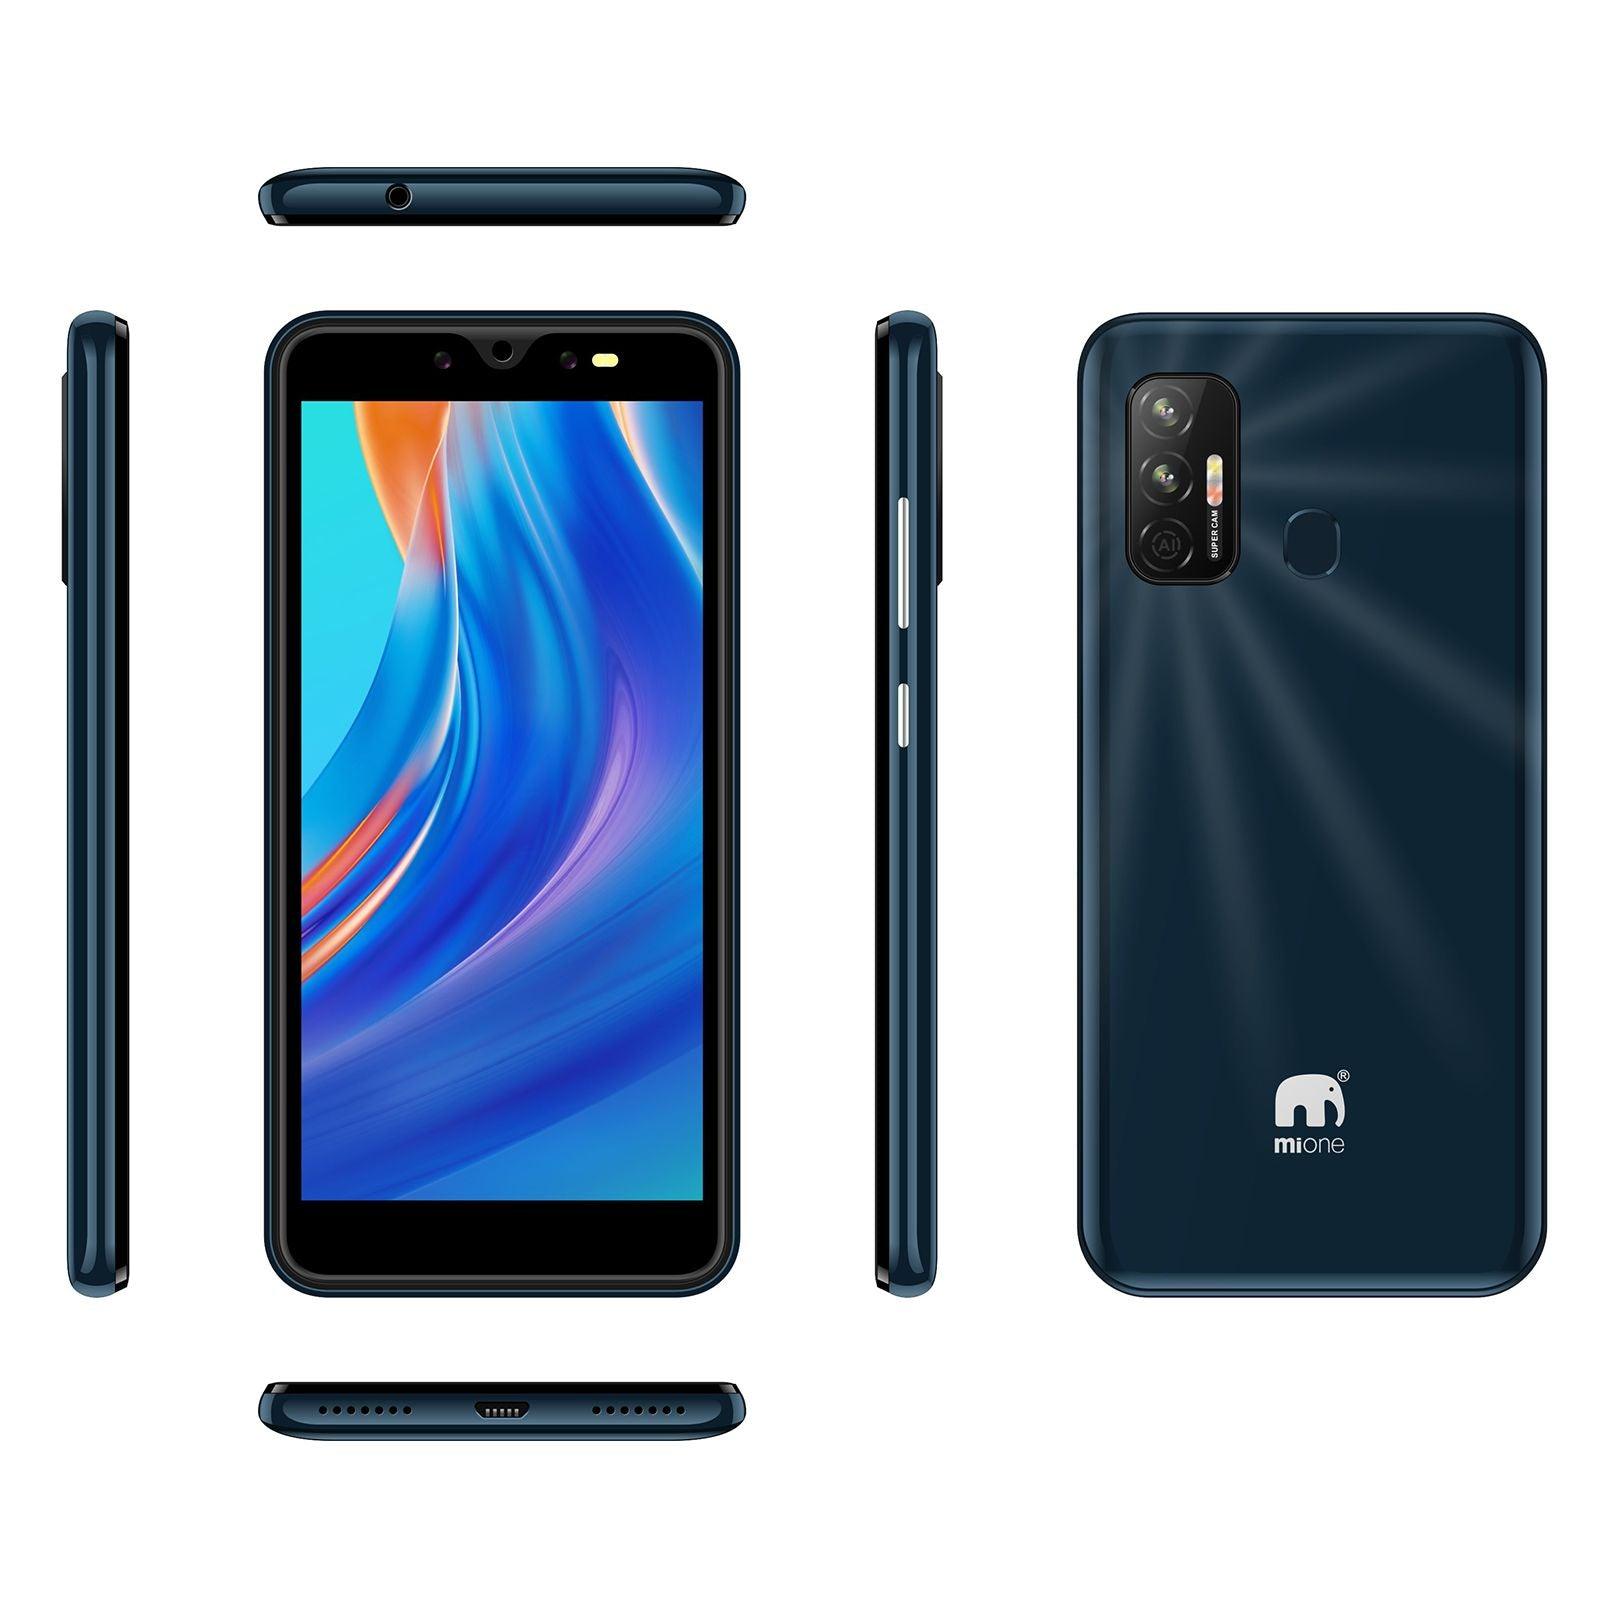 Mione Q13 Dual Sim Smartphone with Fingerprint Unlock